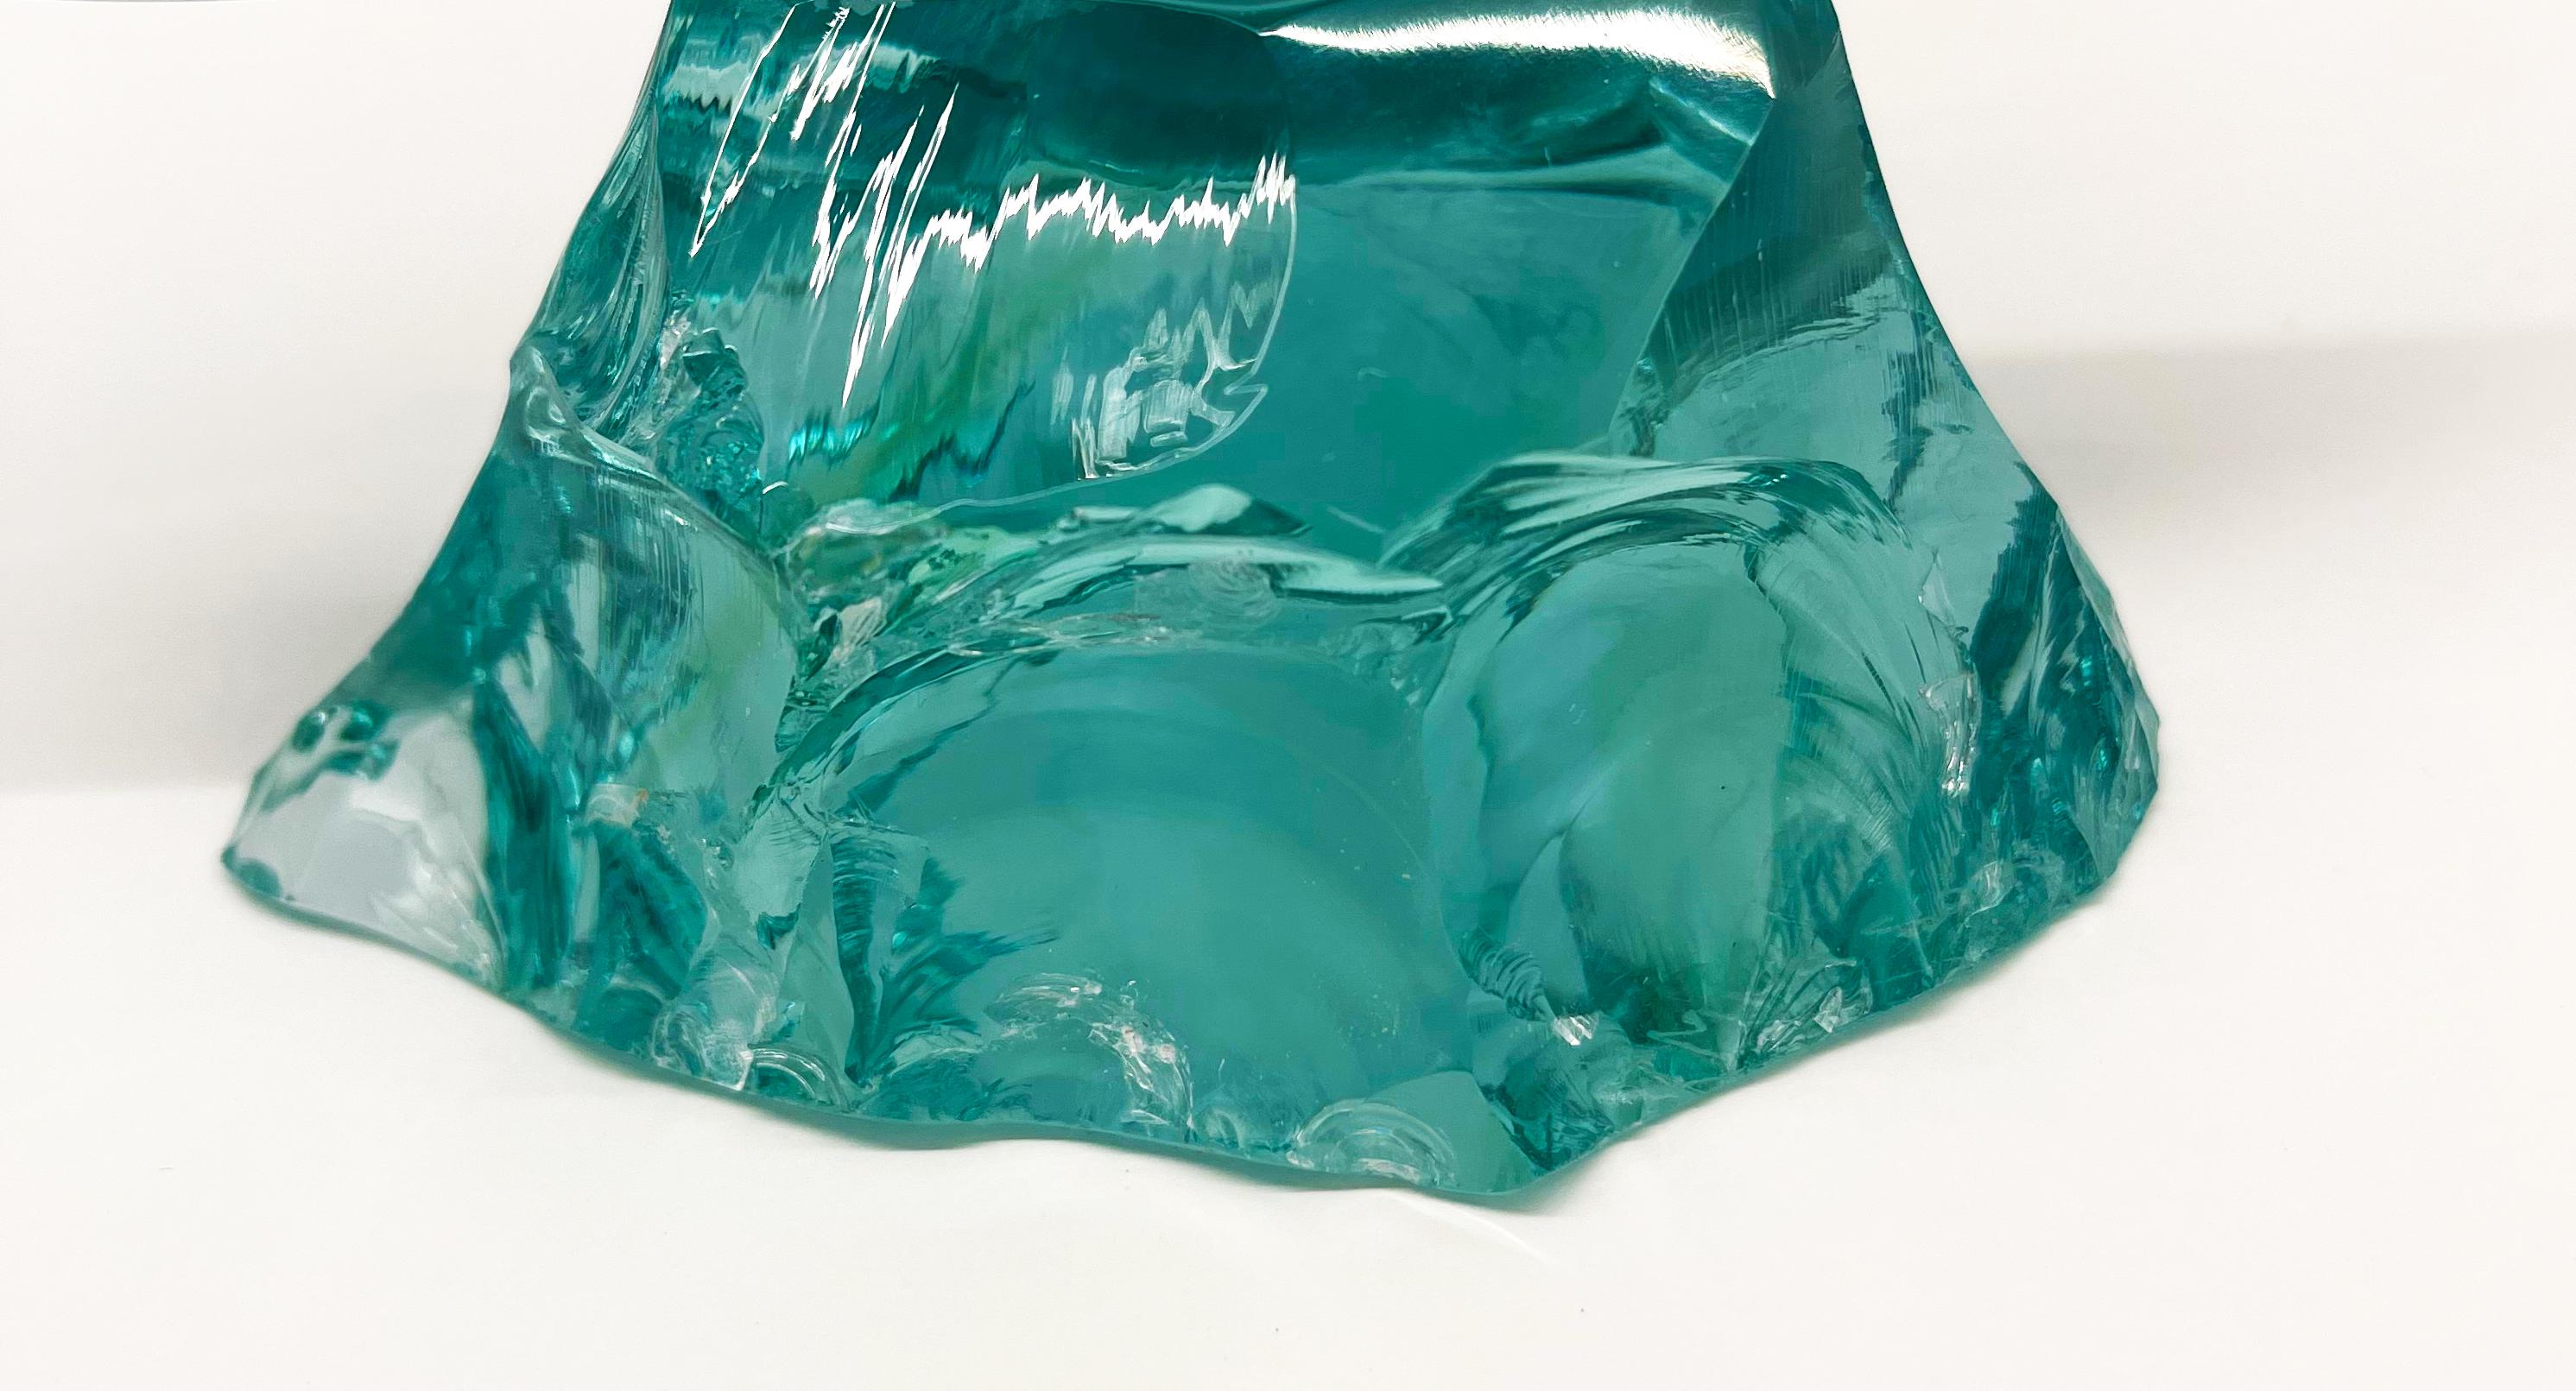 Contemporary 'Sail' Handmade Aquamarine Crystal Sculpture by Ghirò Studio For Sale 1